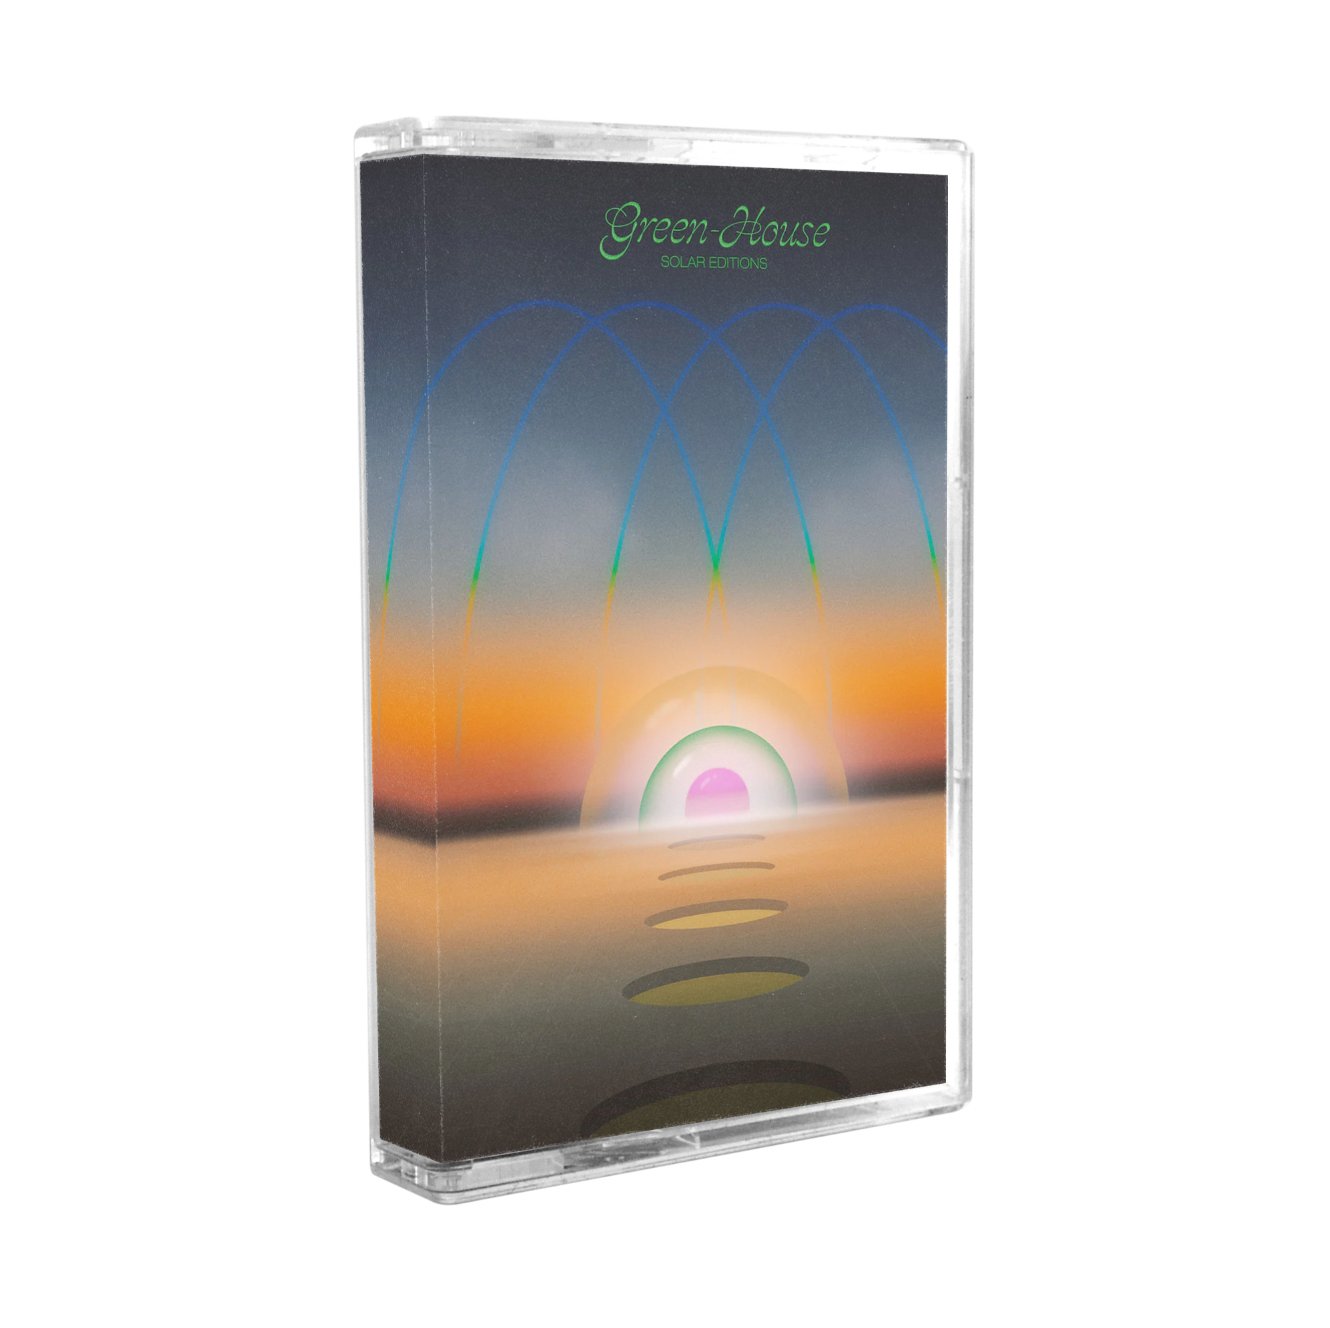 Green~House - Solar Editions - Inner Ocean Records